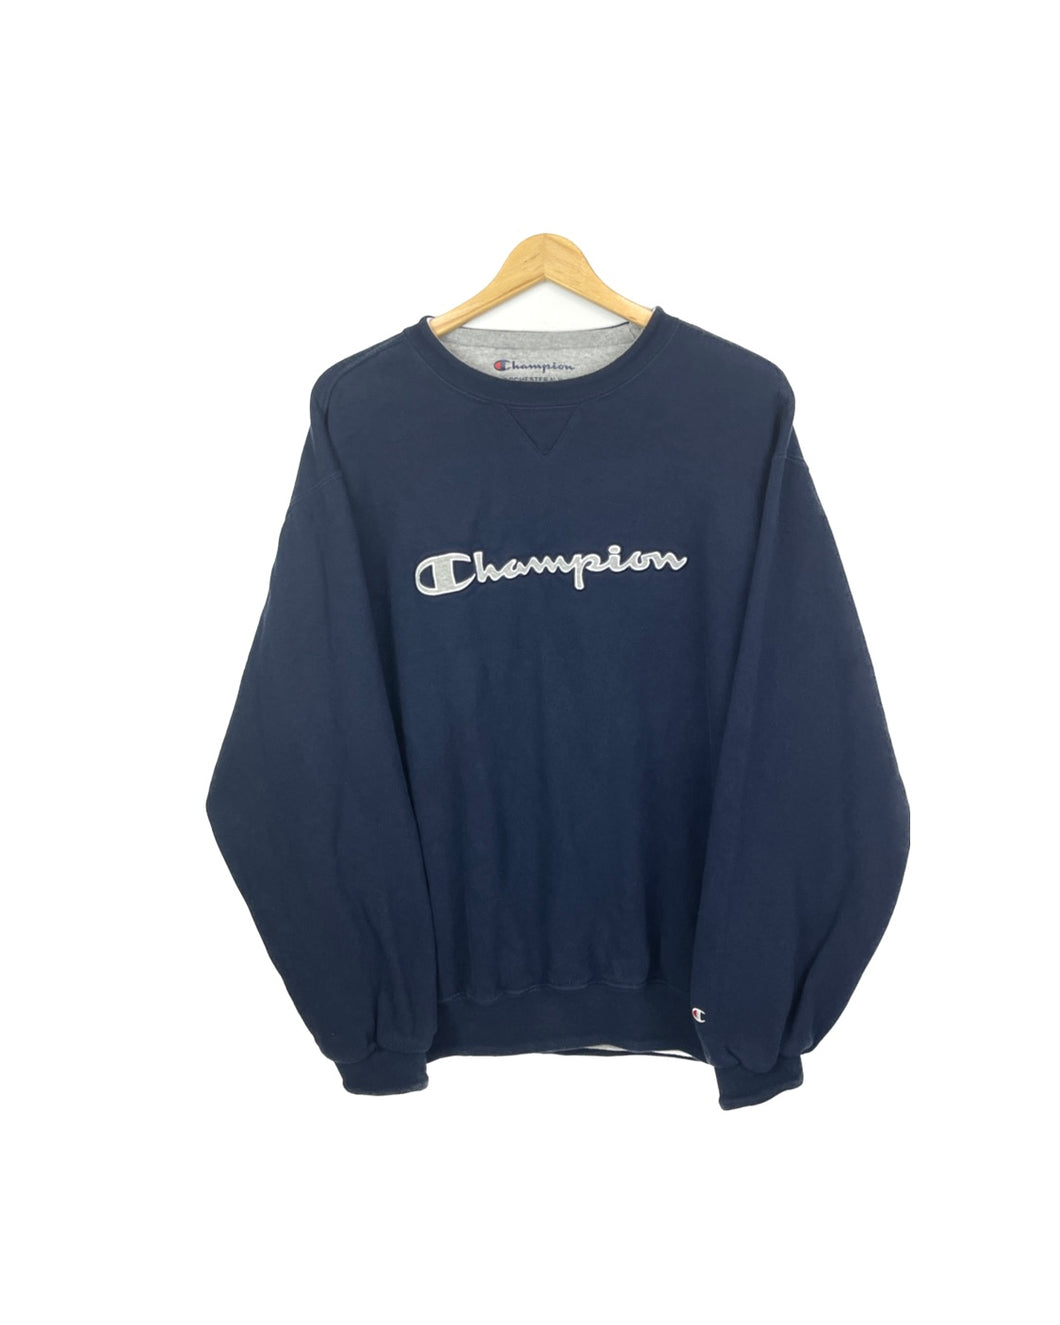 Champion Sweatshirt - XLarge